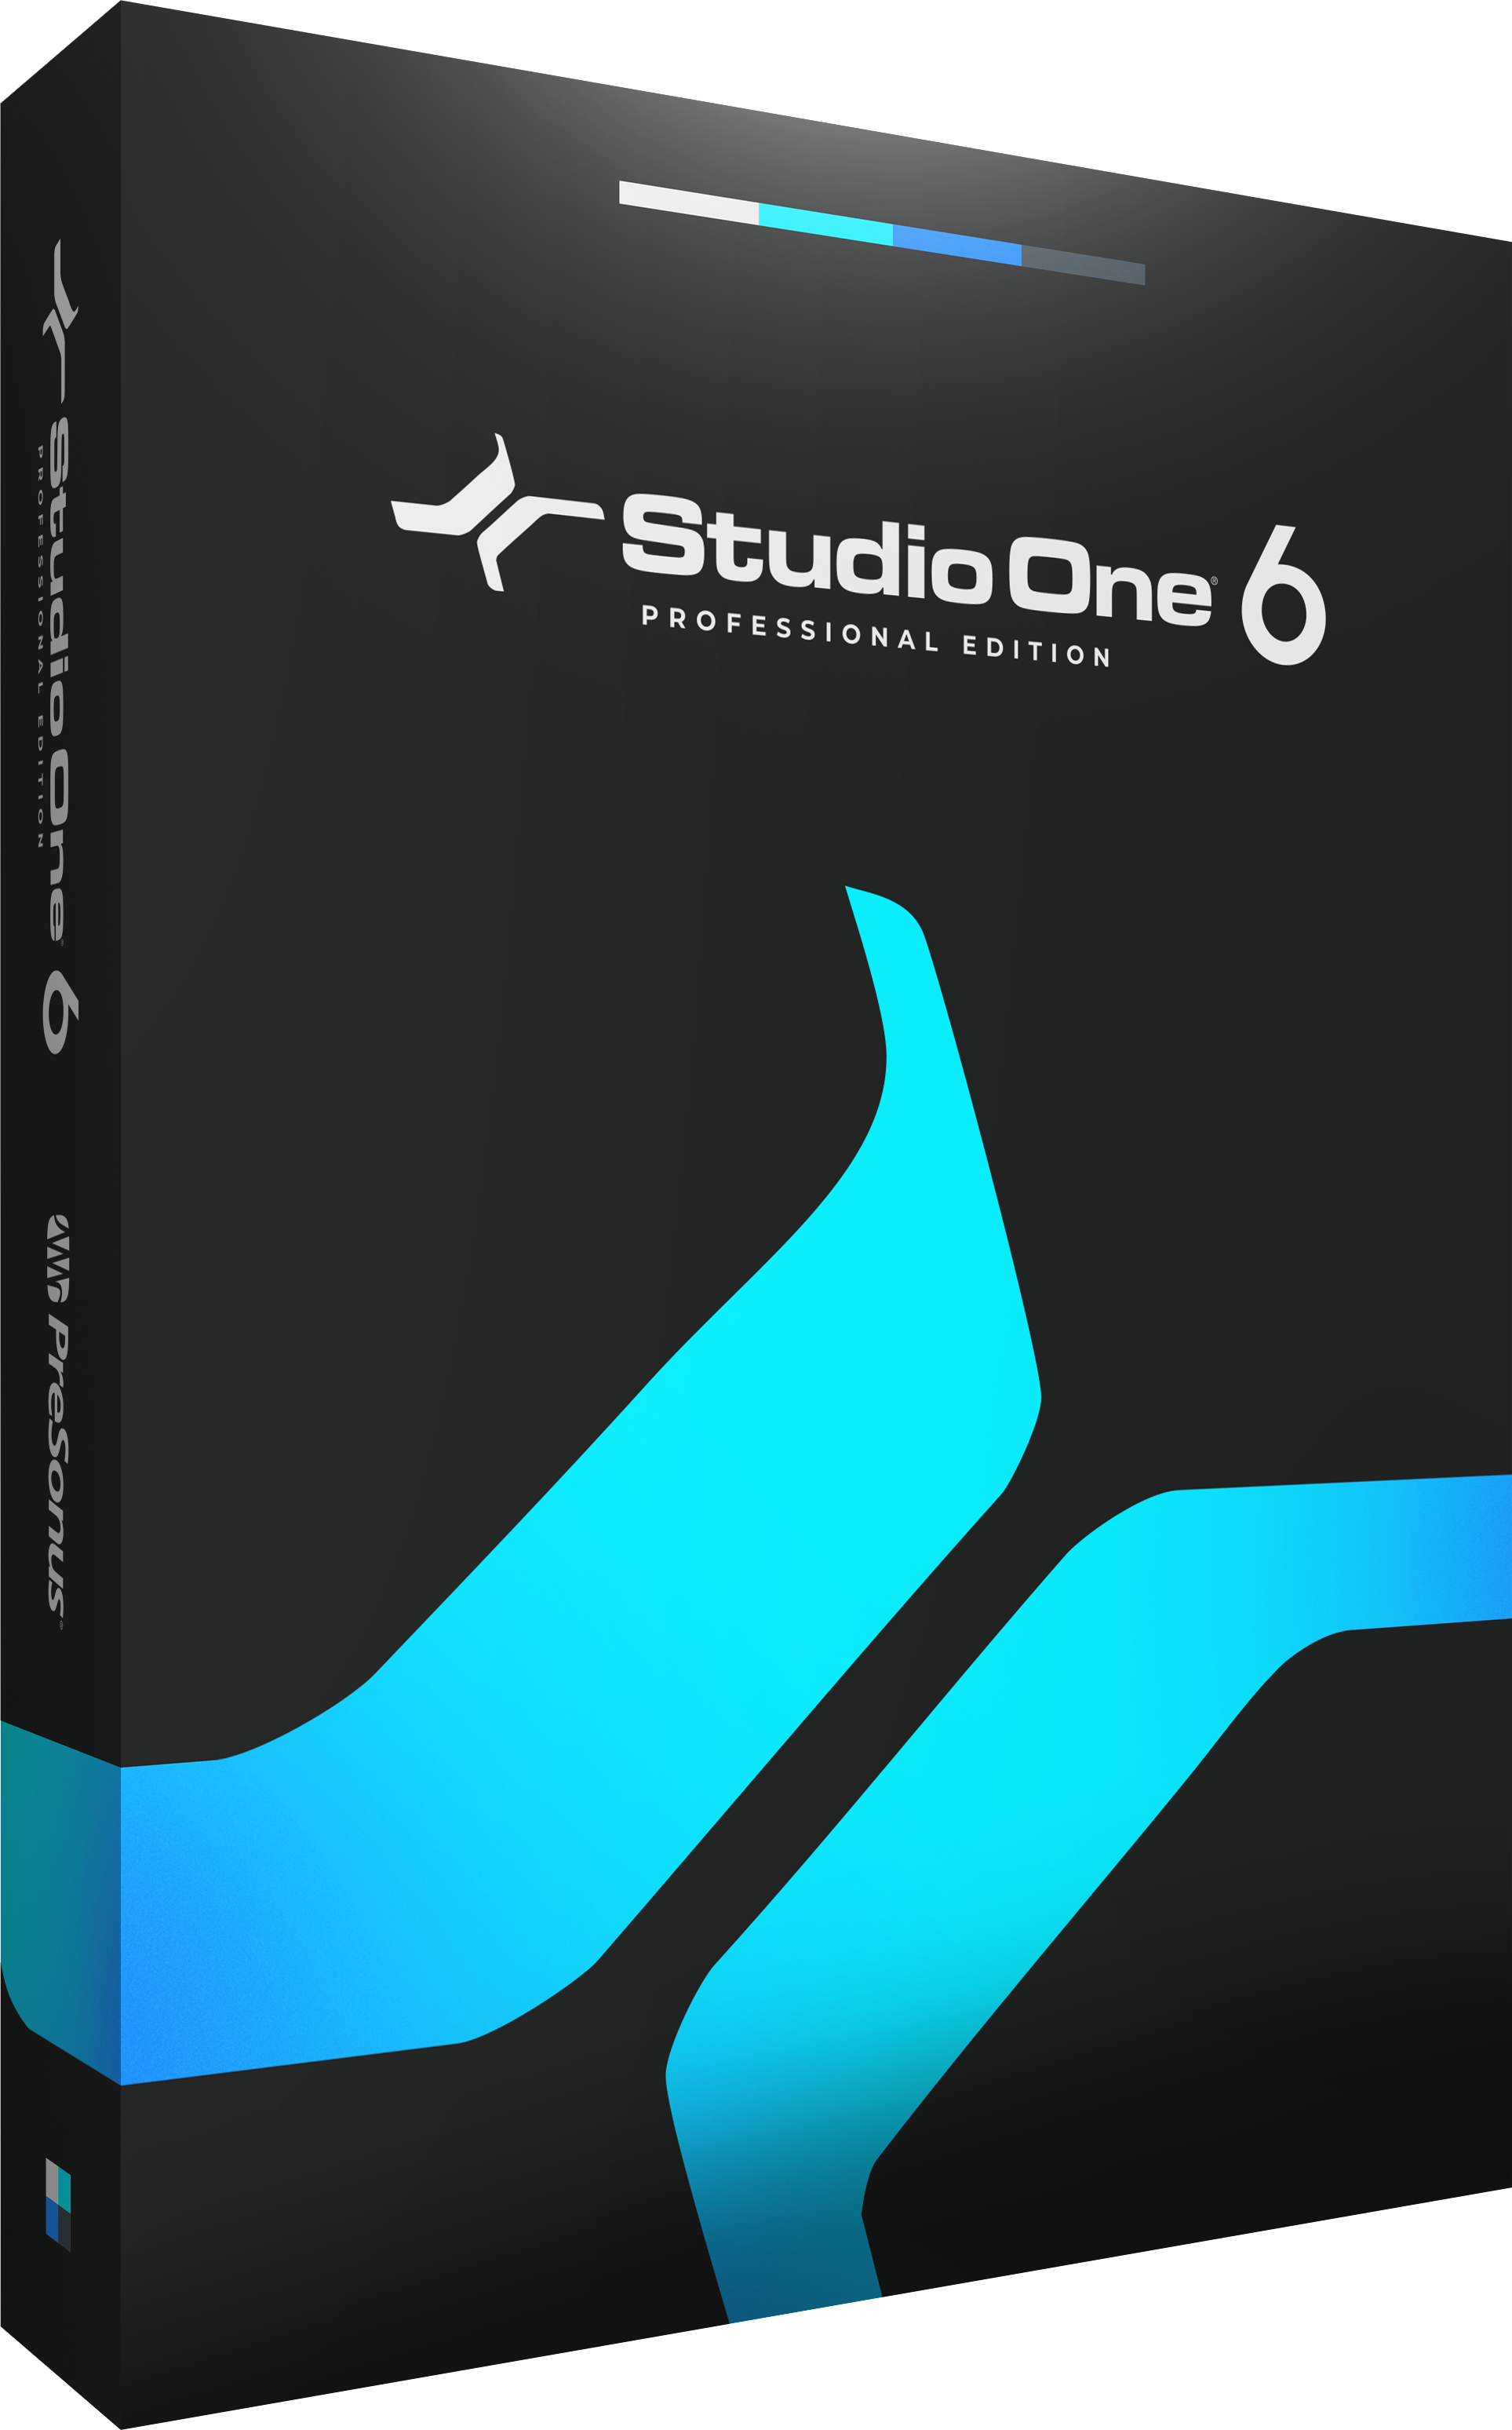 PreSonus Studio One 6 Professional Crossgrade from another DAW